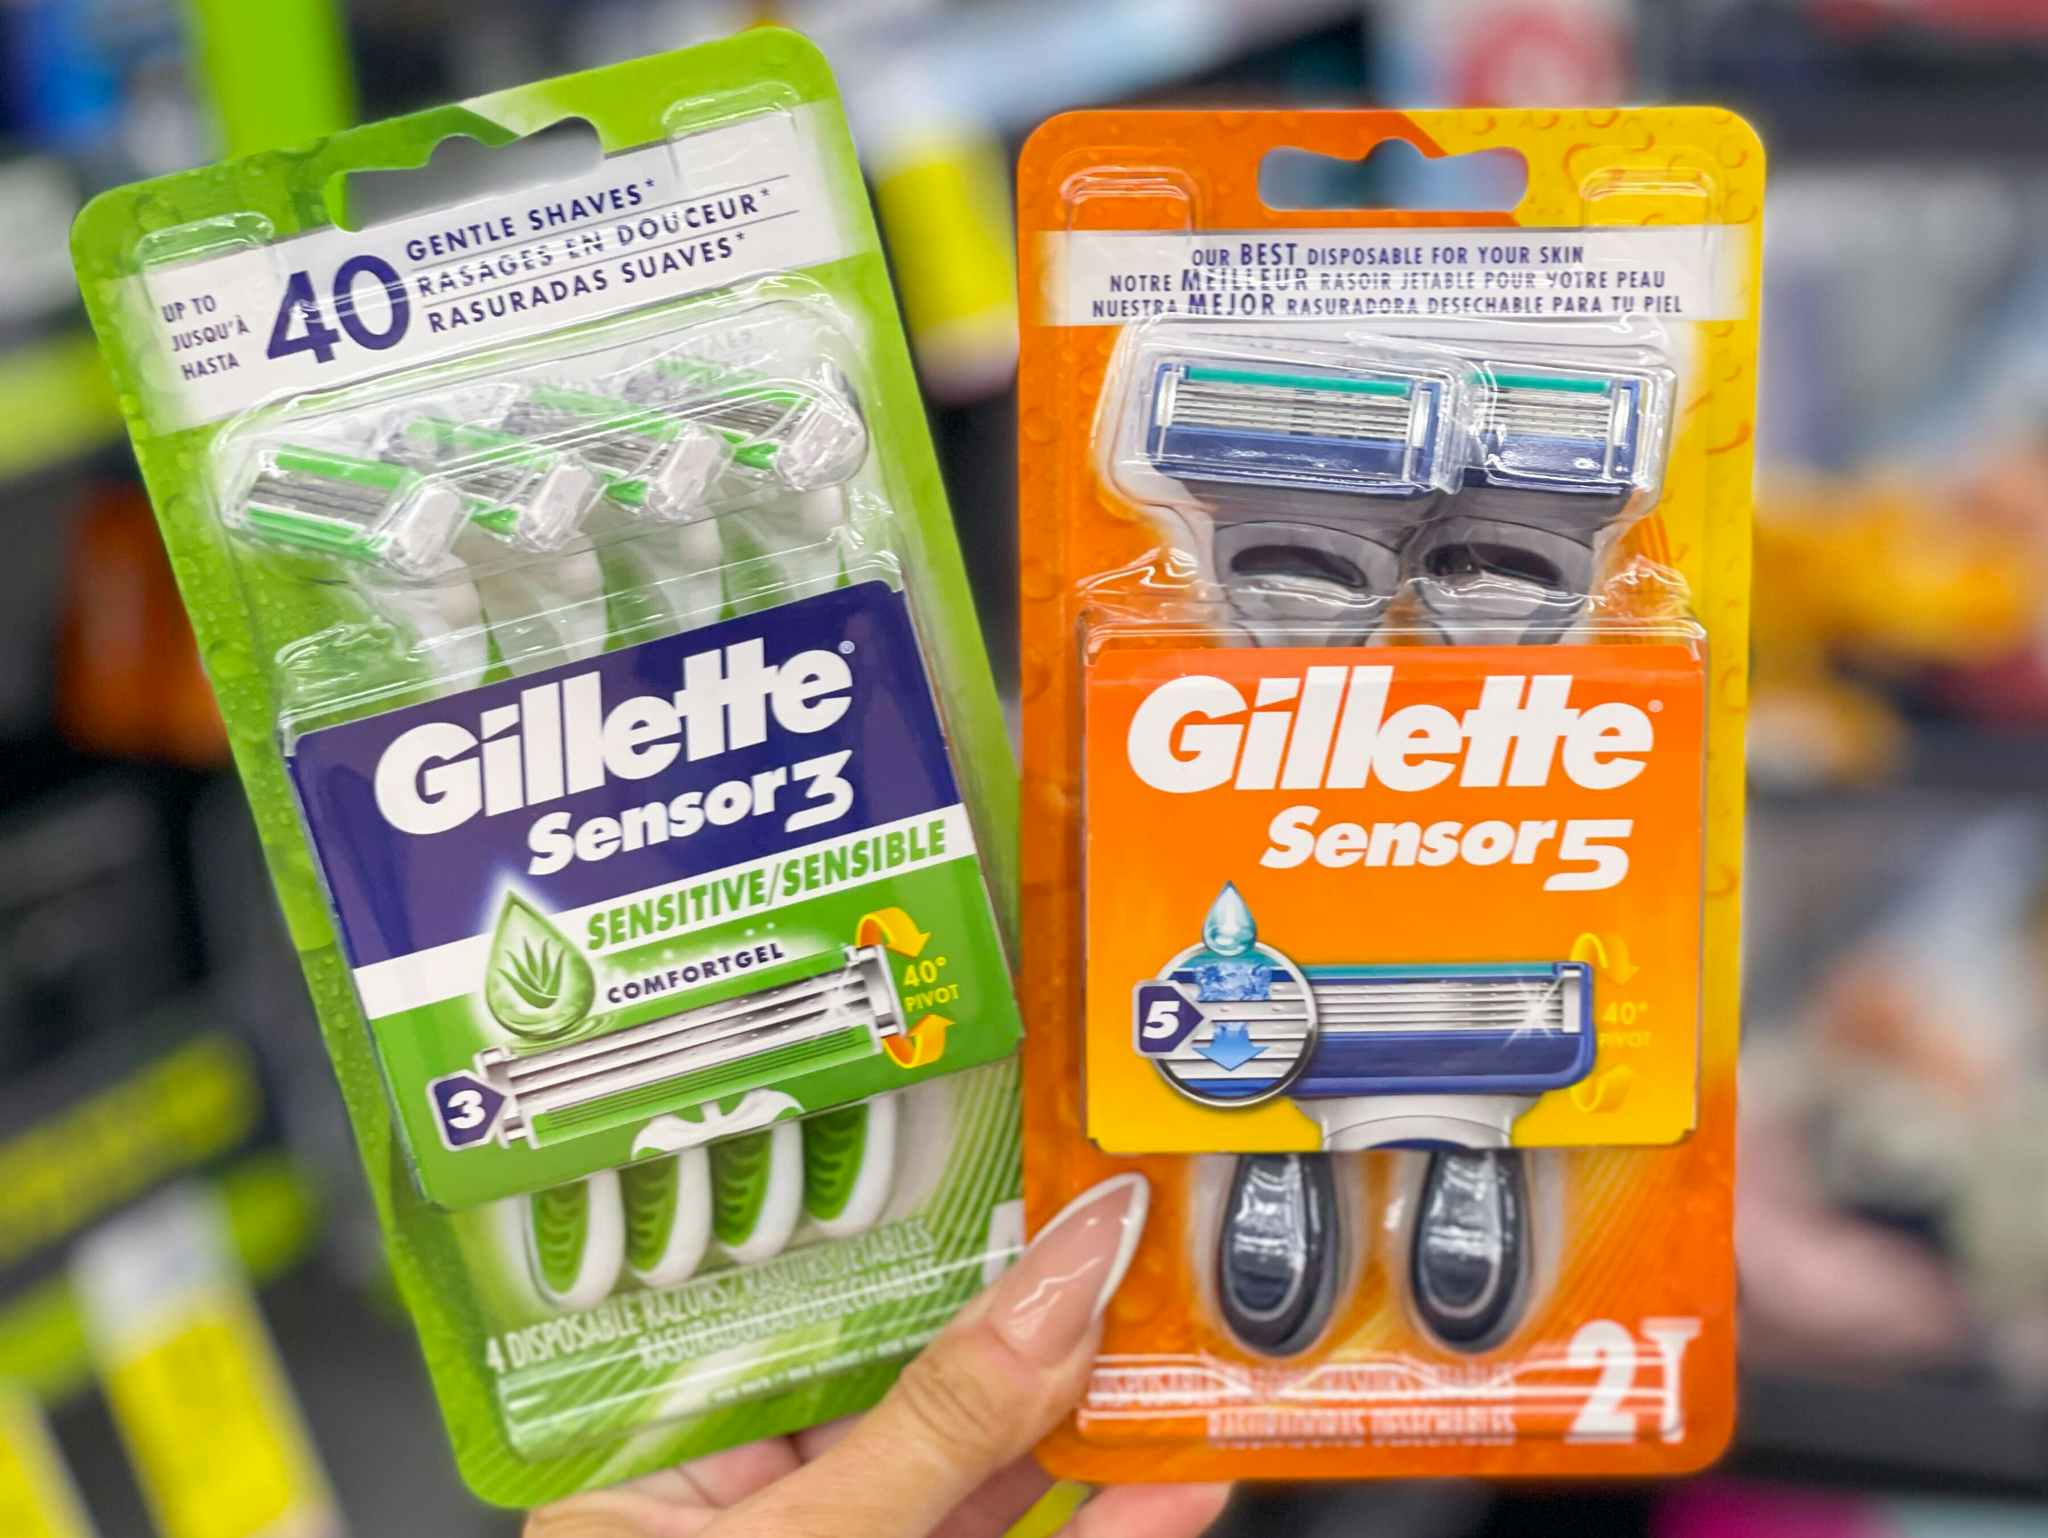 gillette disposable razors held in hand